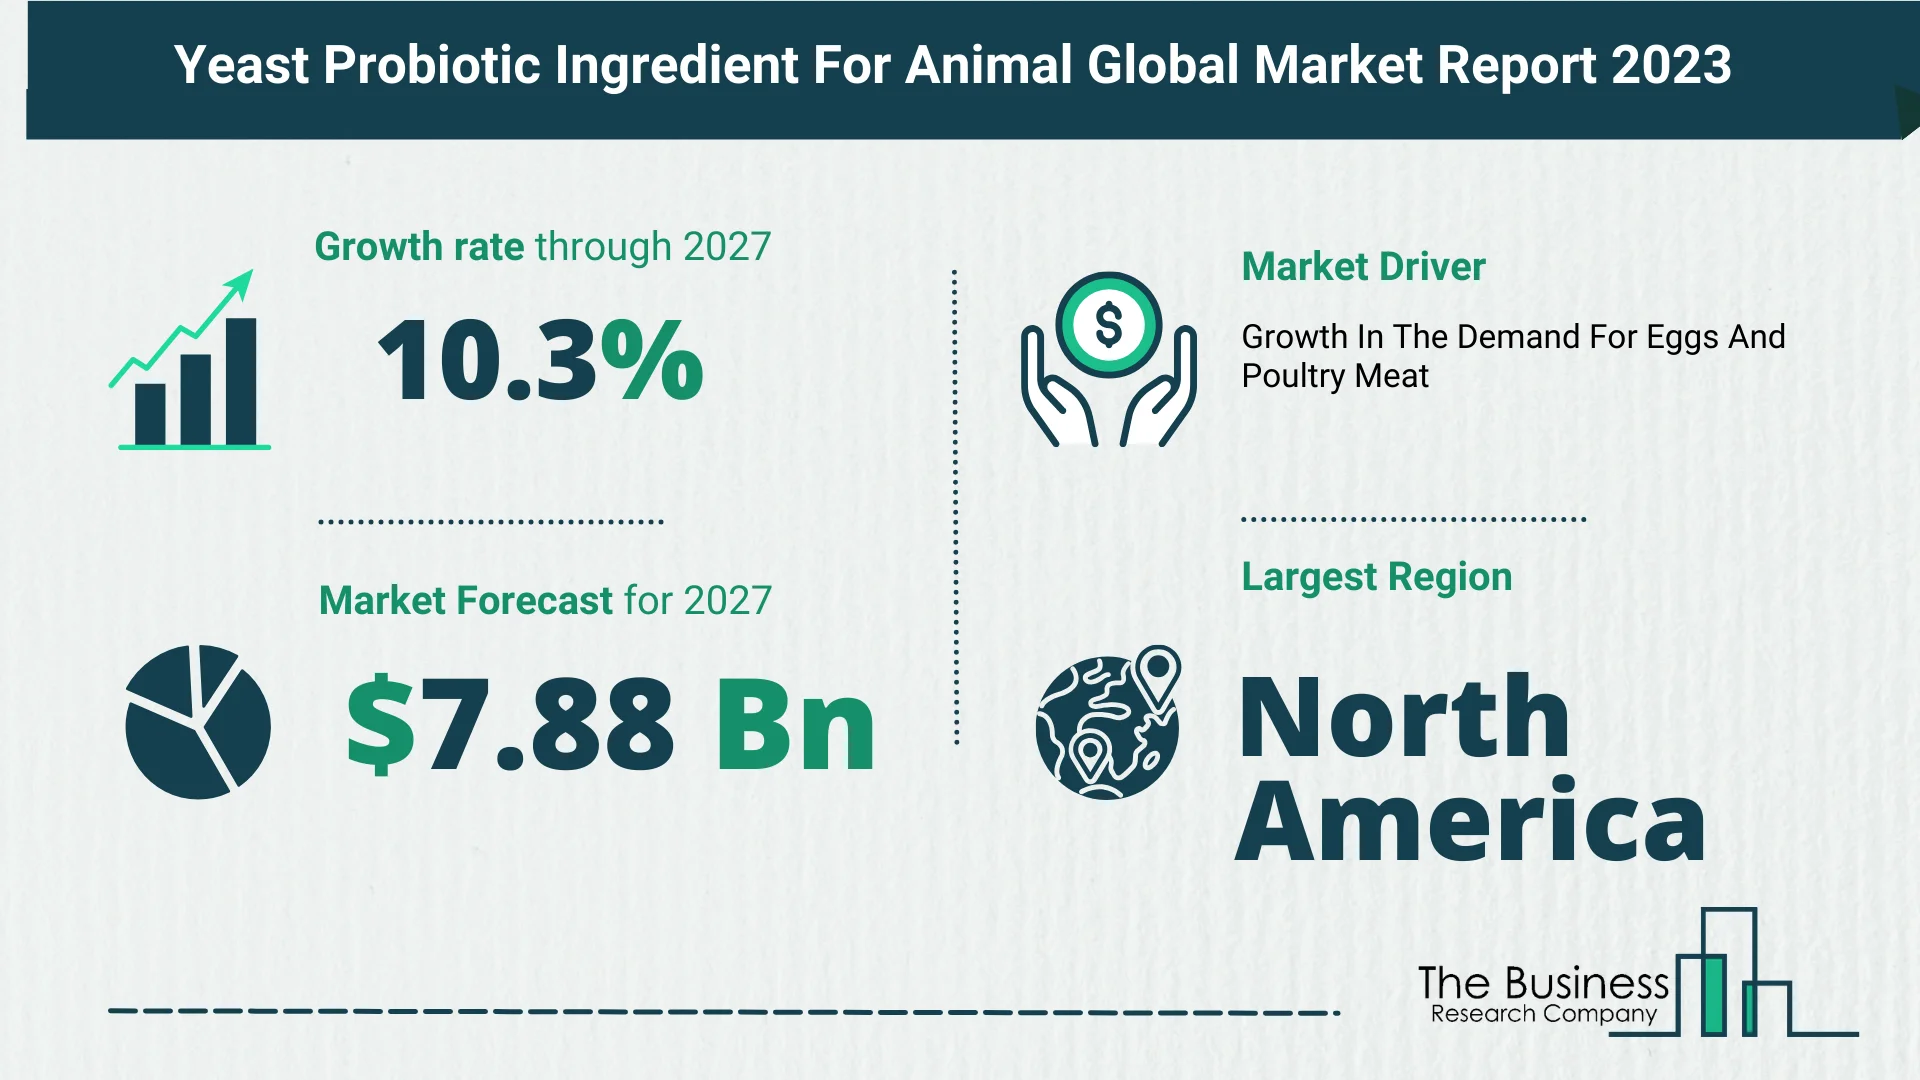 Global Yeast Probiotic Ingredient For Animal Market